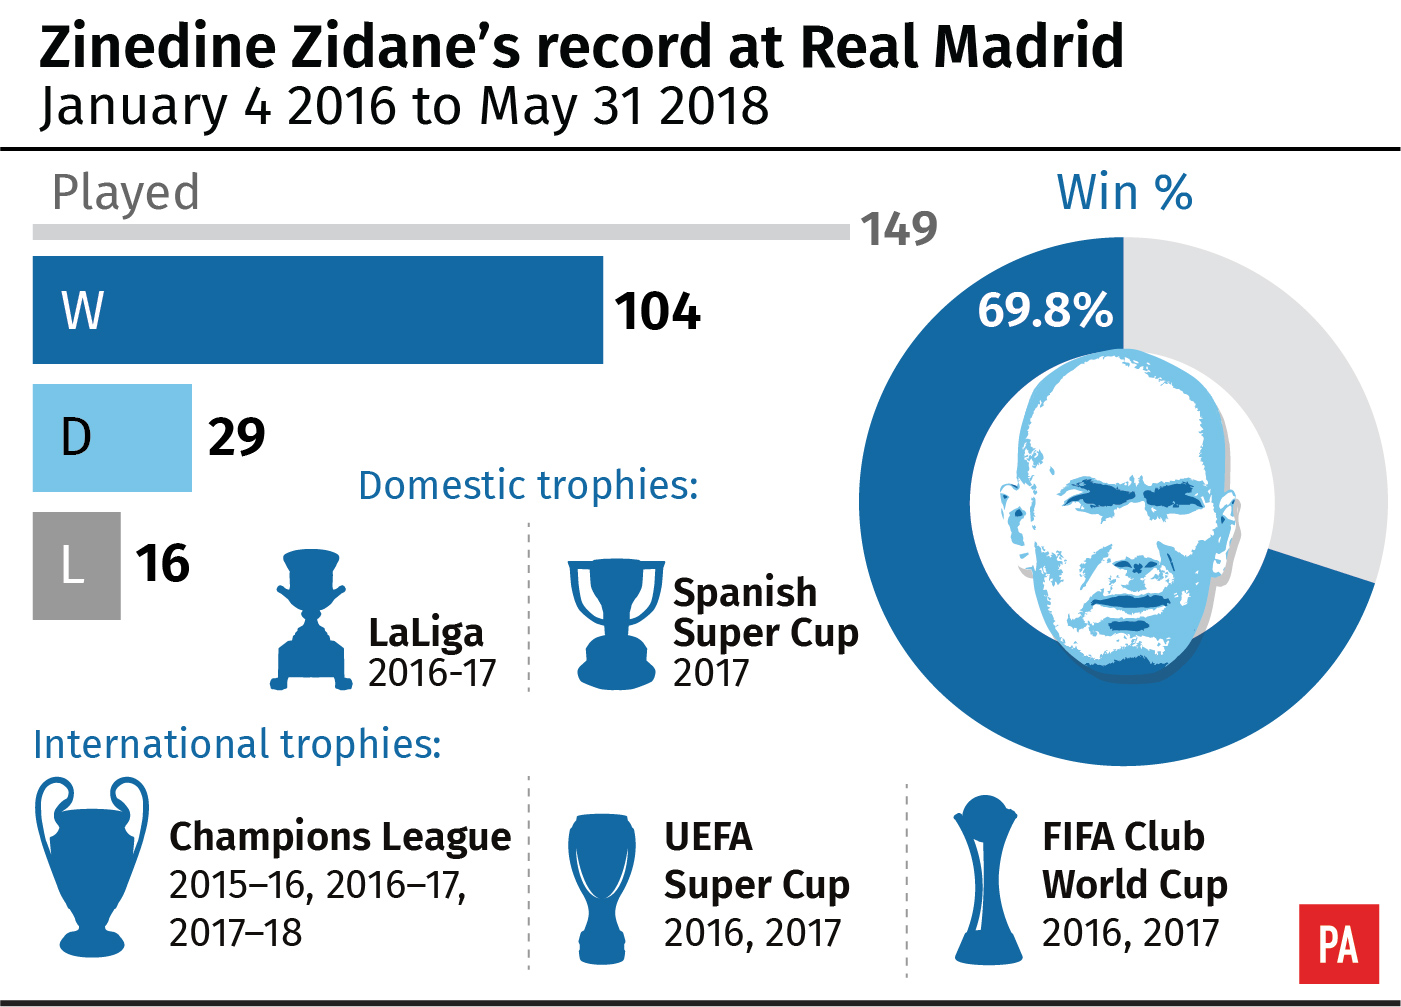 Zinedine Zidane's record as Real Madrid coach